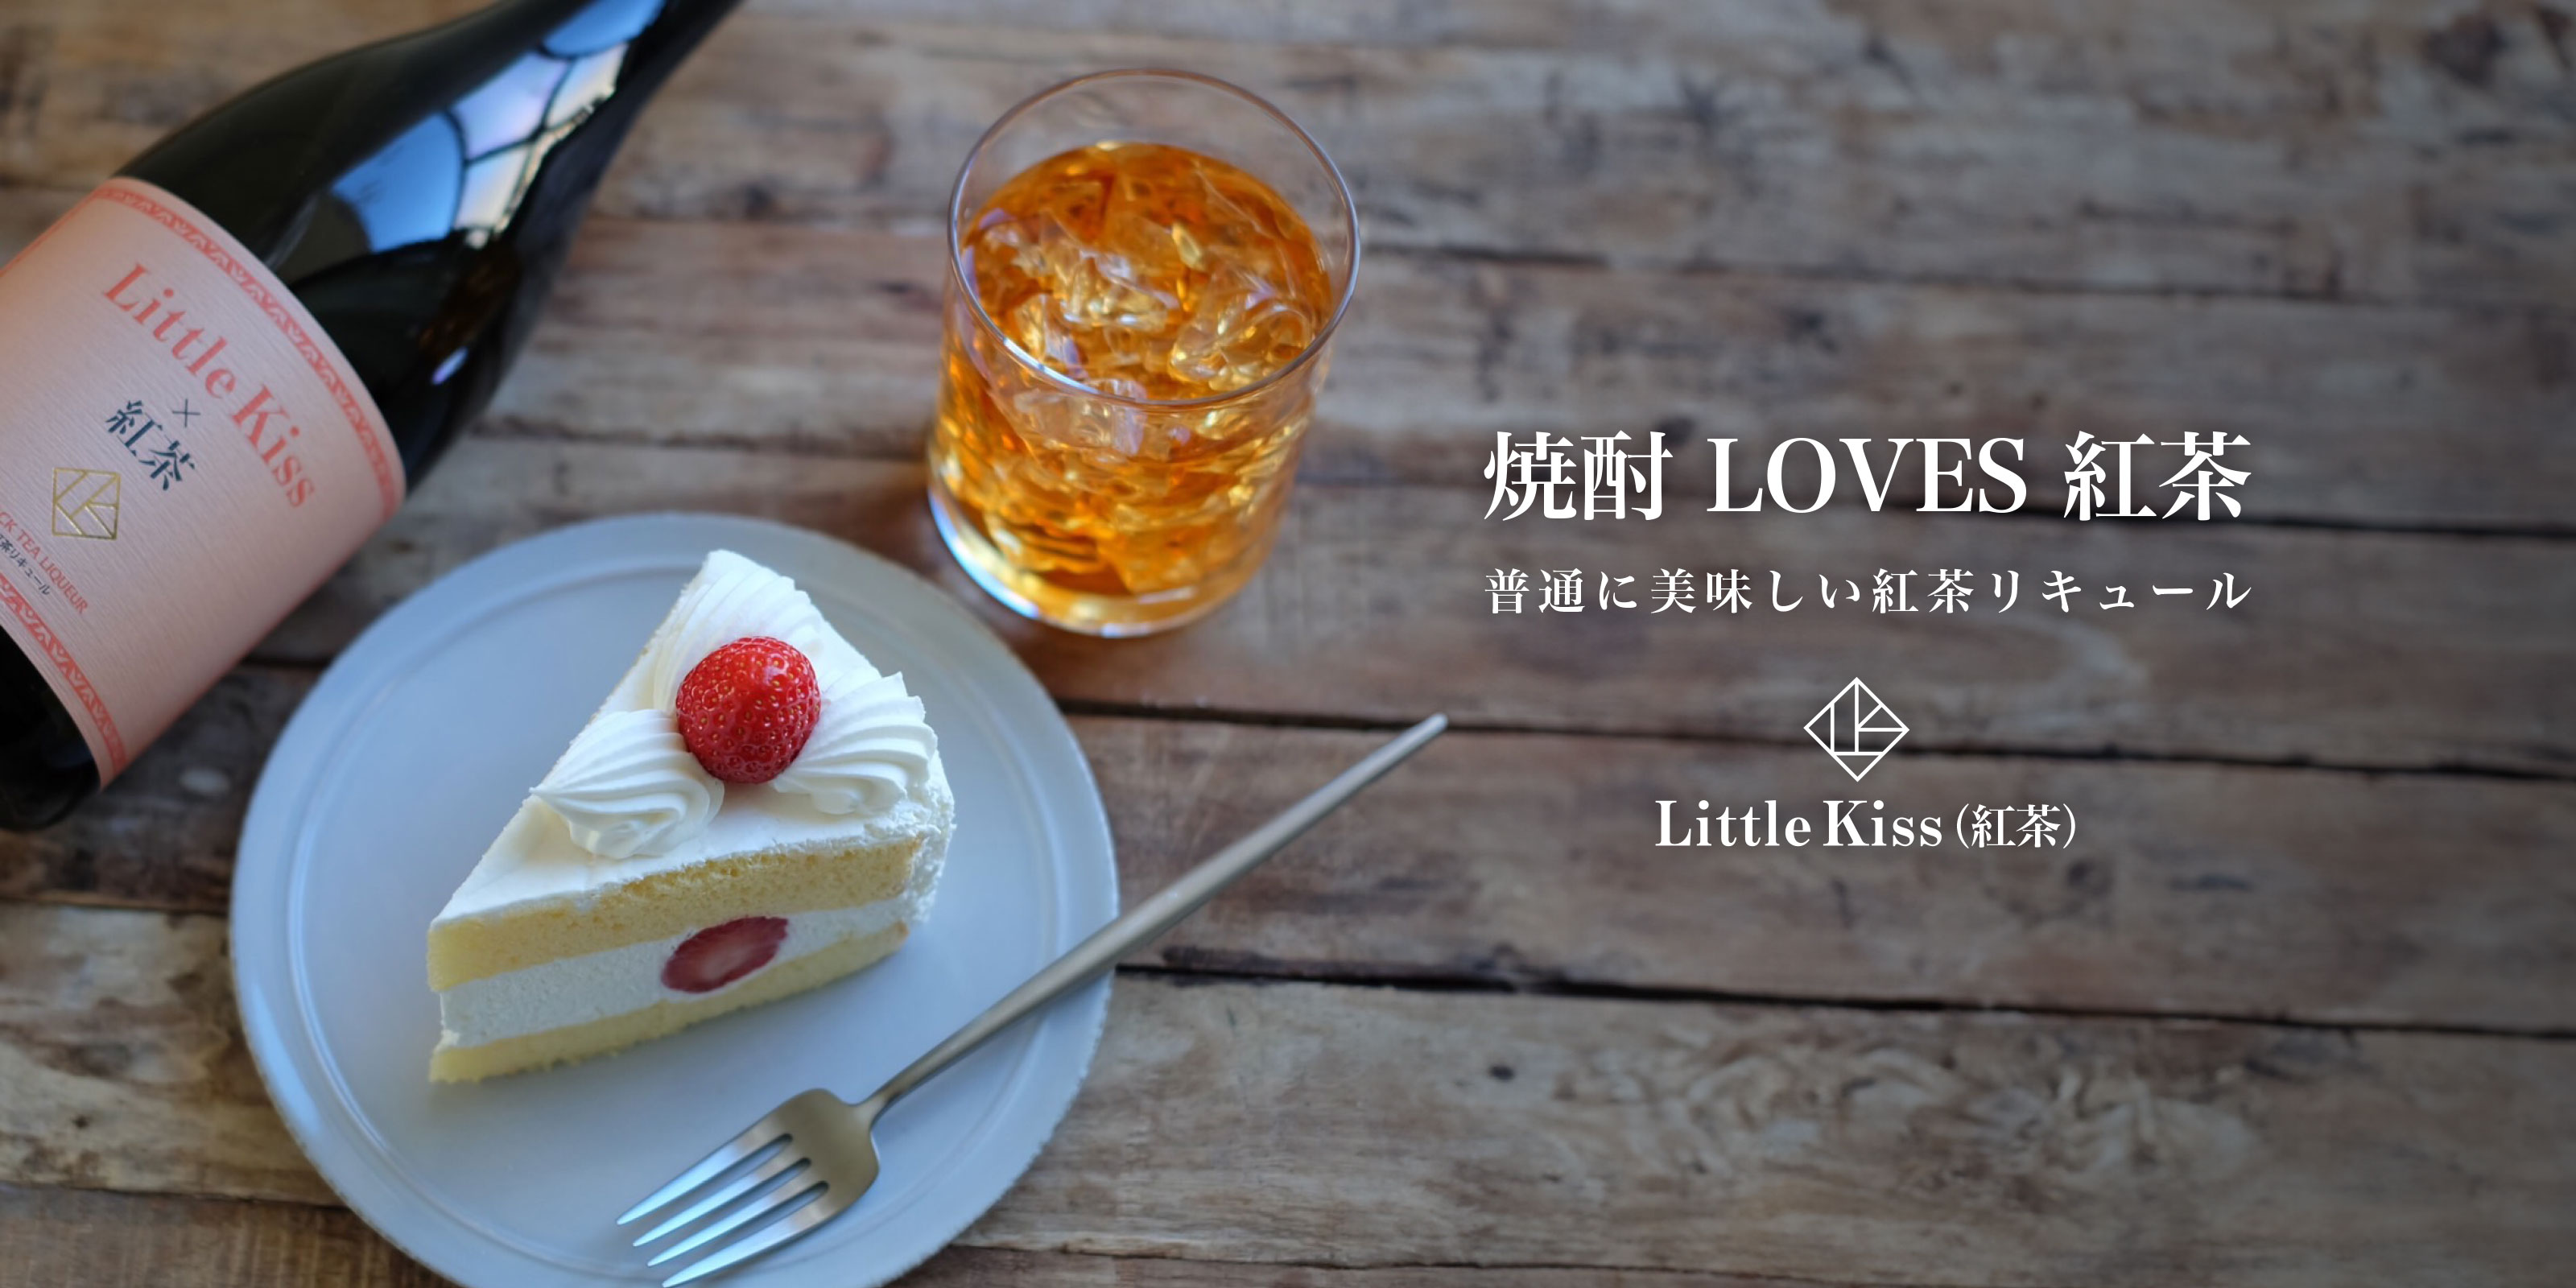 Little Kiss(紅茶)メイン